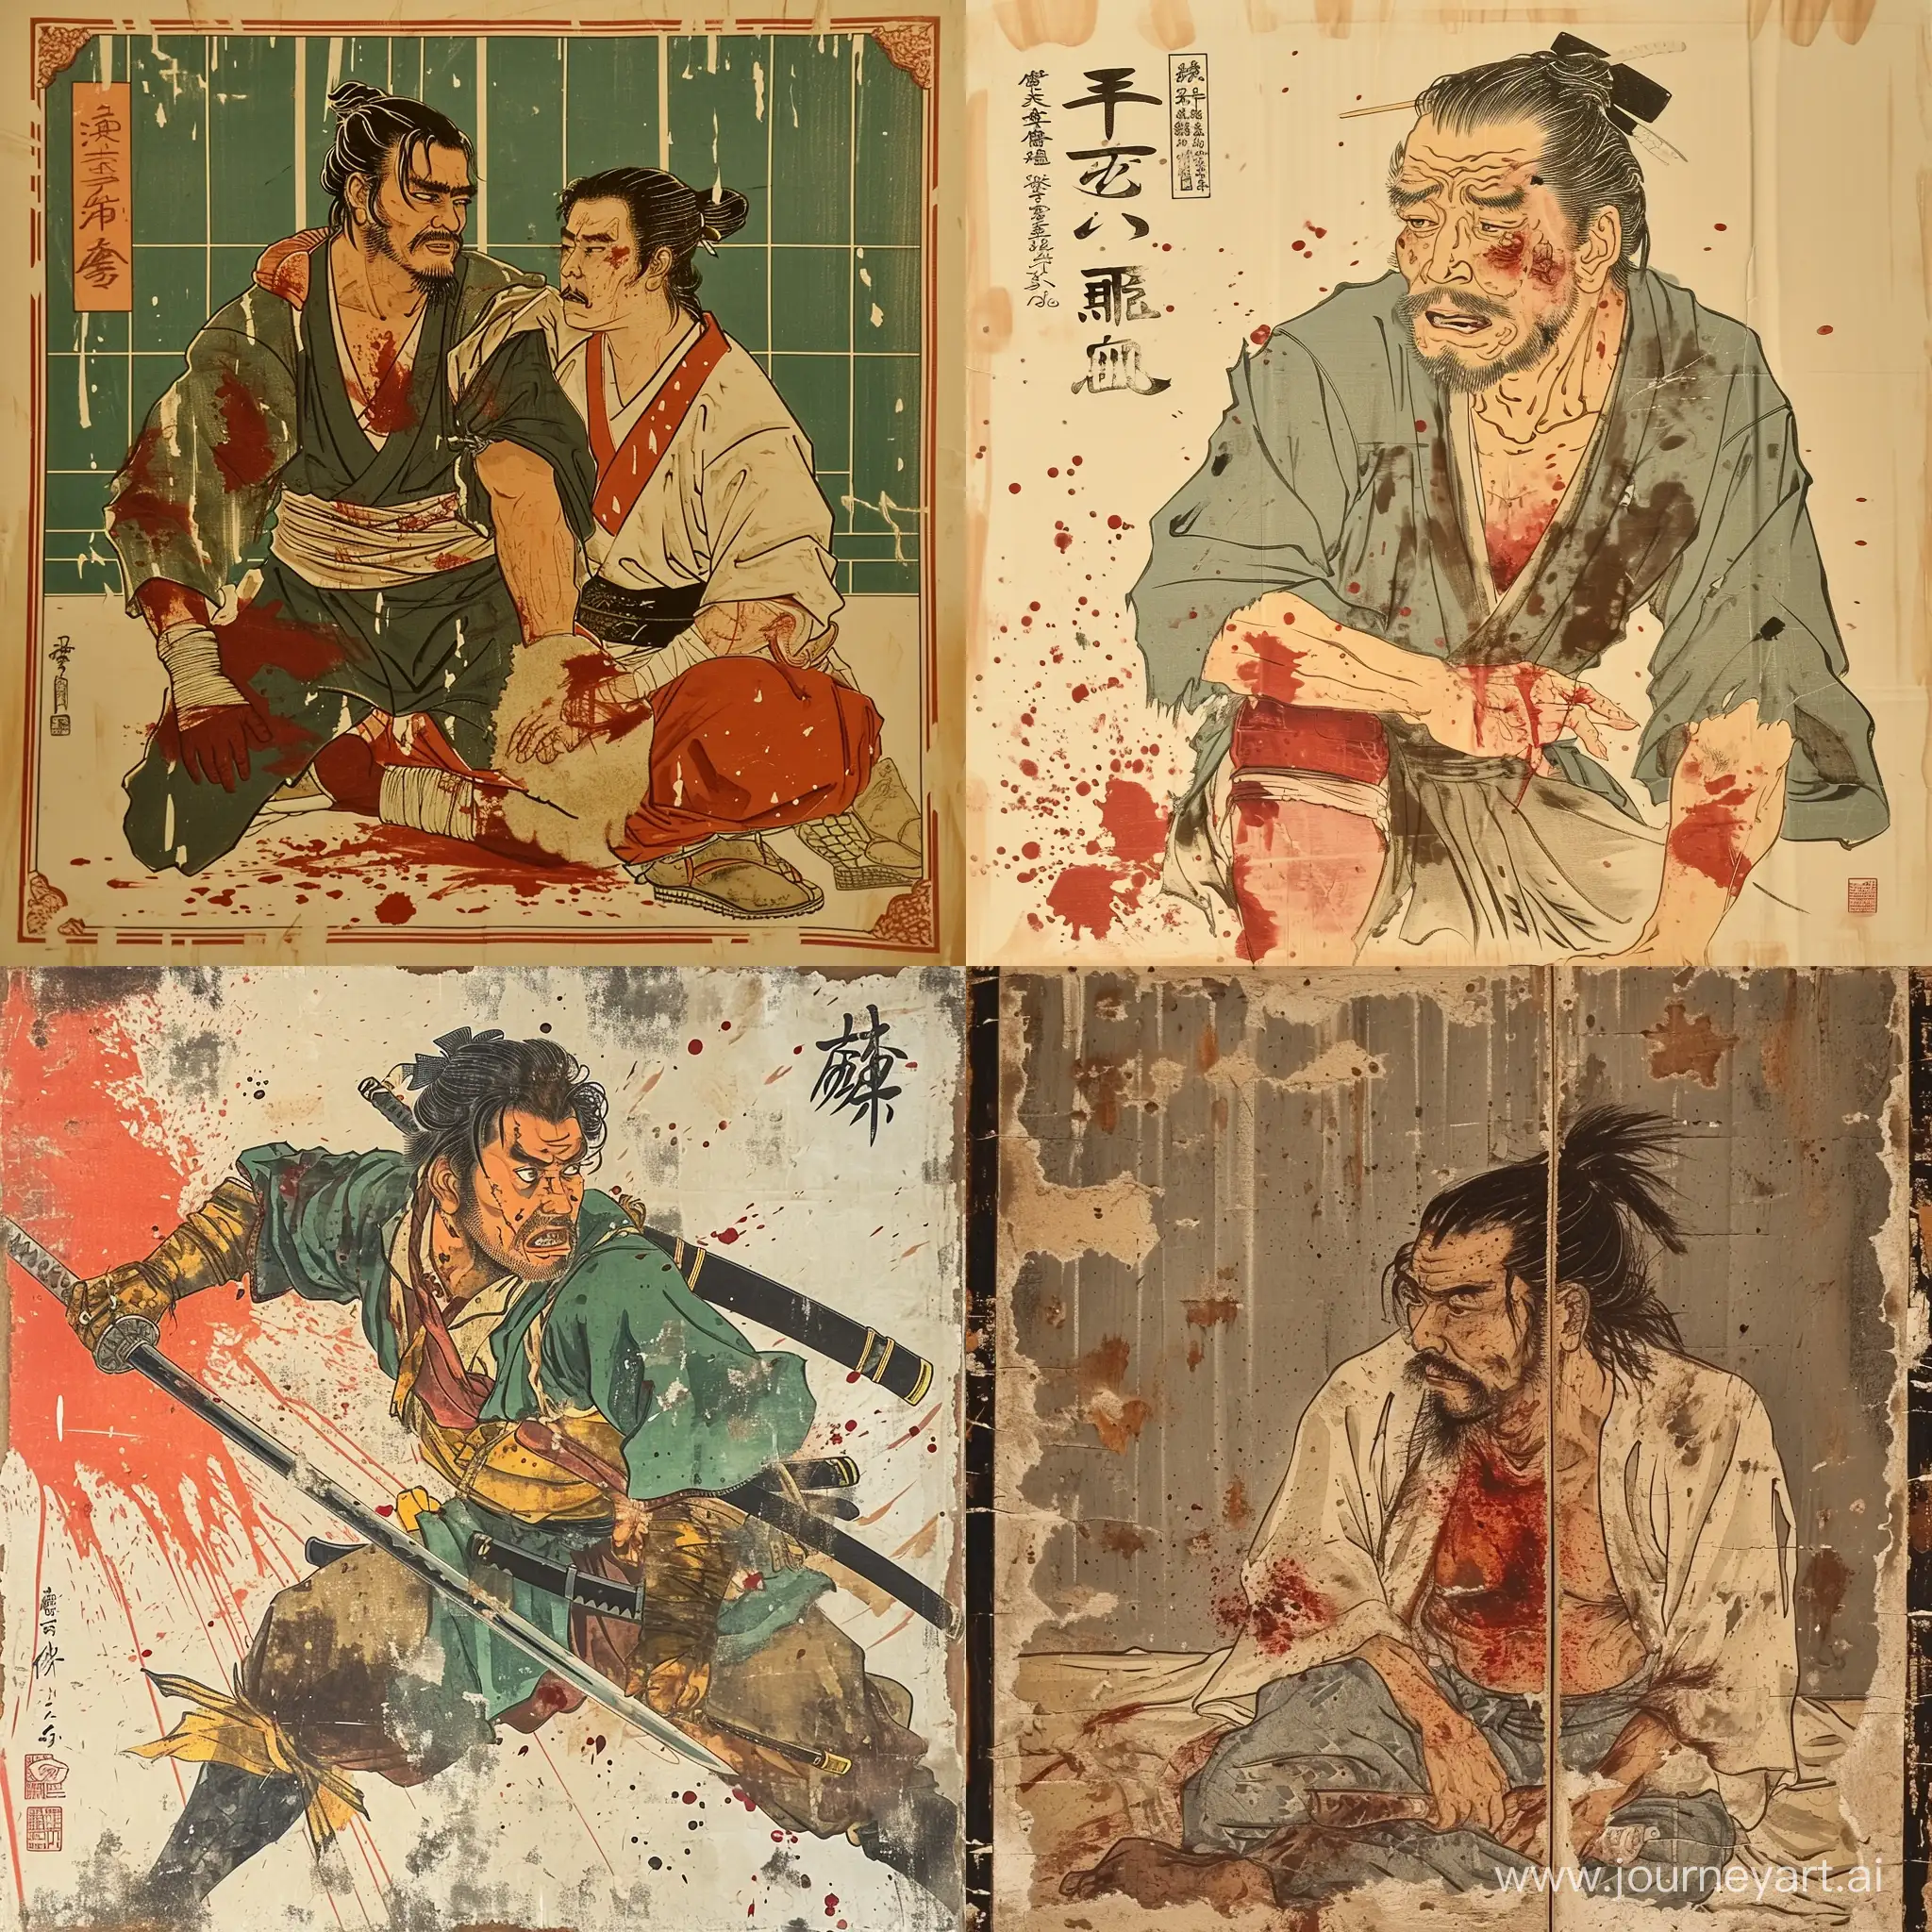 Wounded Hitokiri,Battle damaged,Japanese poster,in feudal japan,Ukiyo-e style